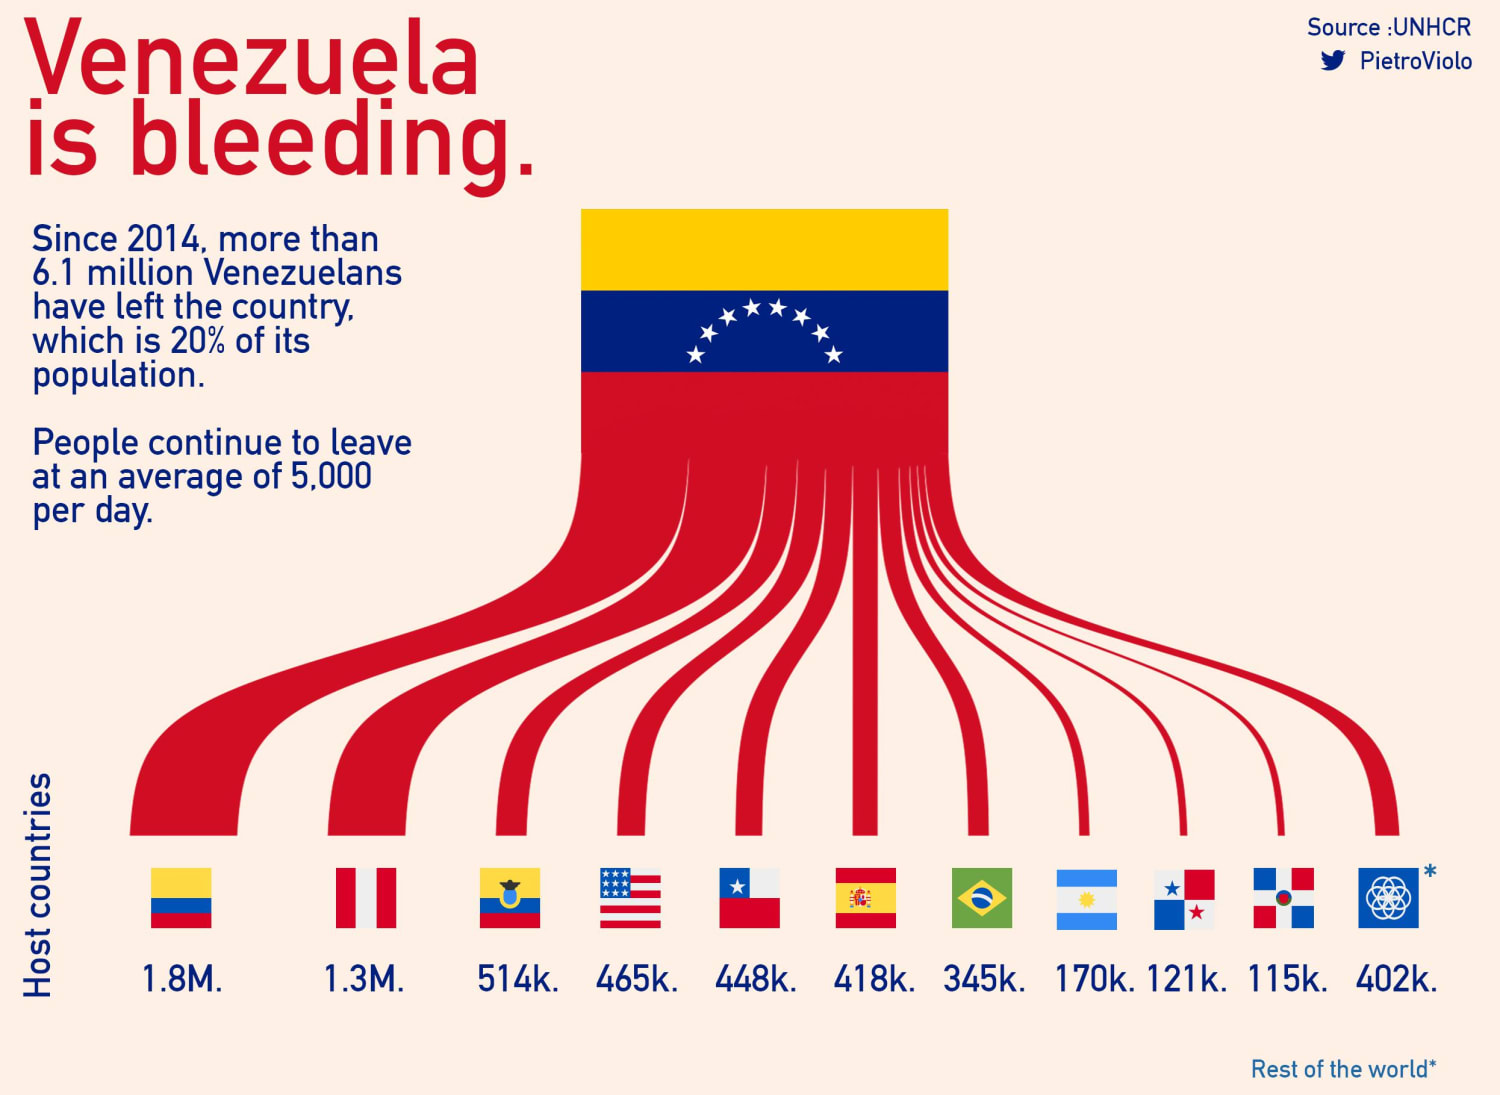 Since 2014, 6.1 million Venezuelans have left their country.